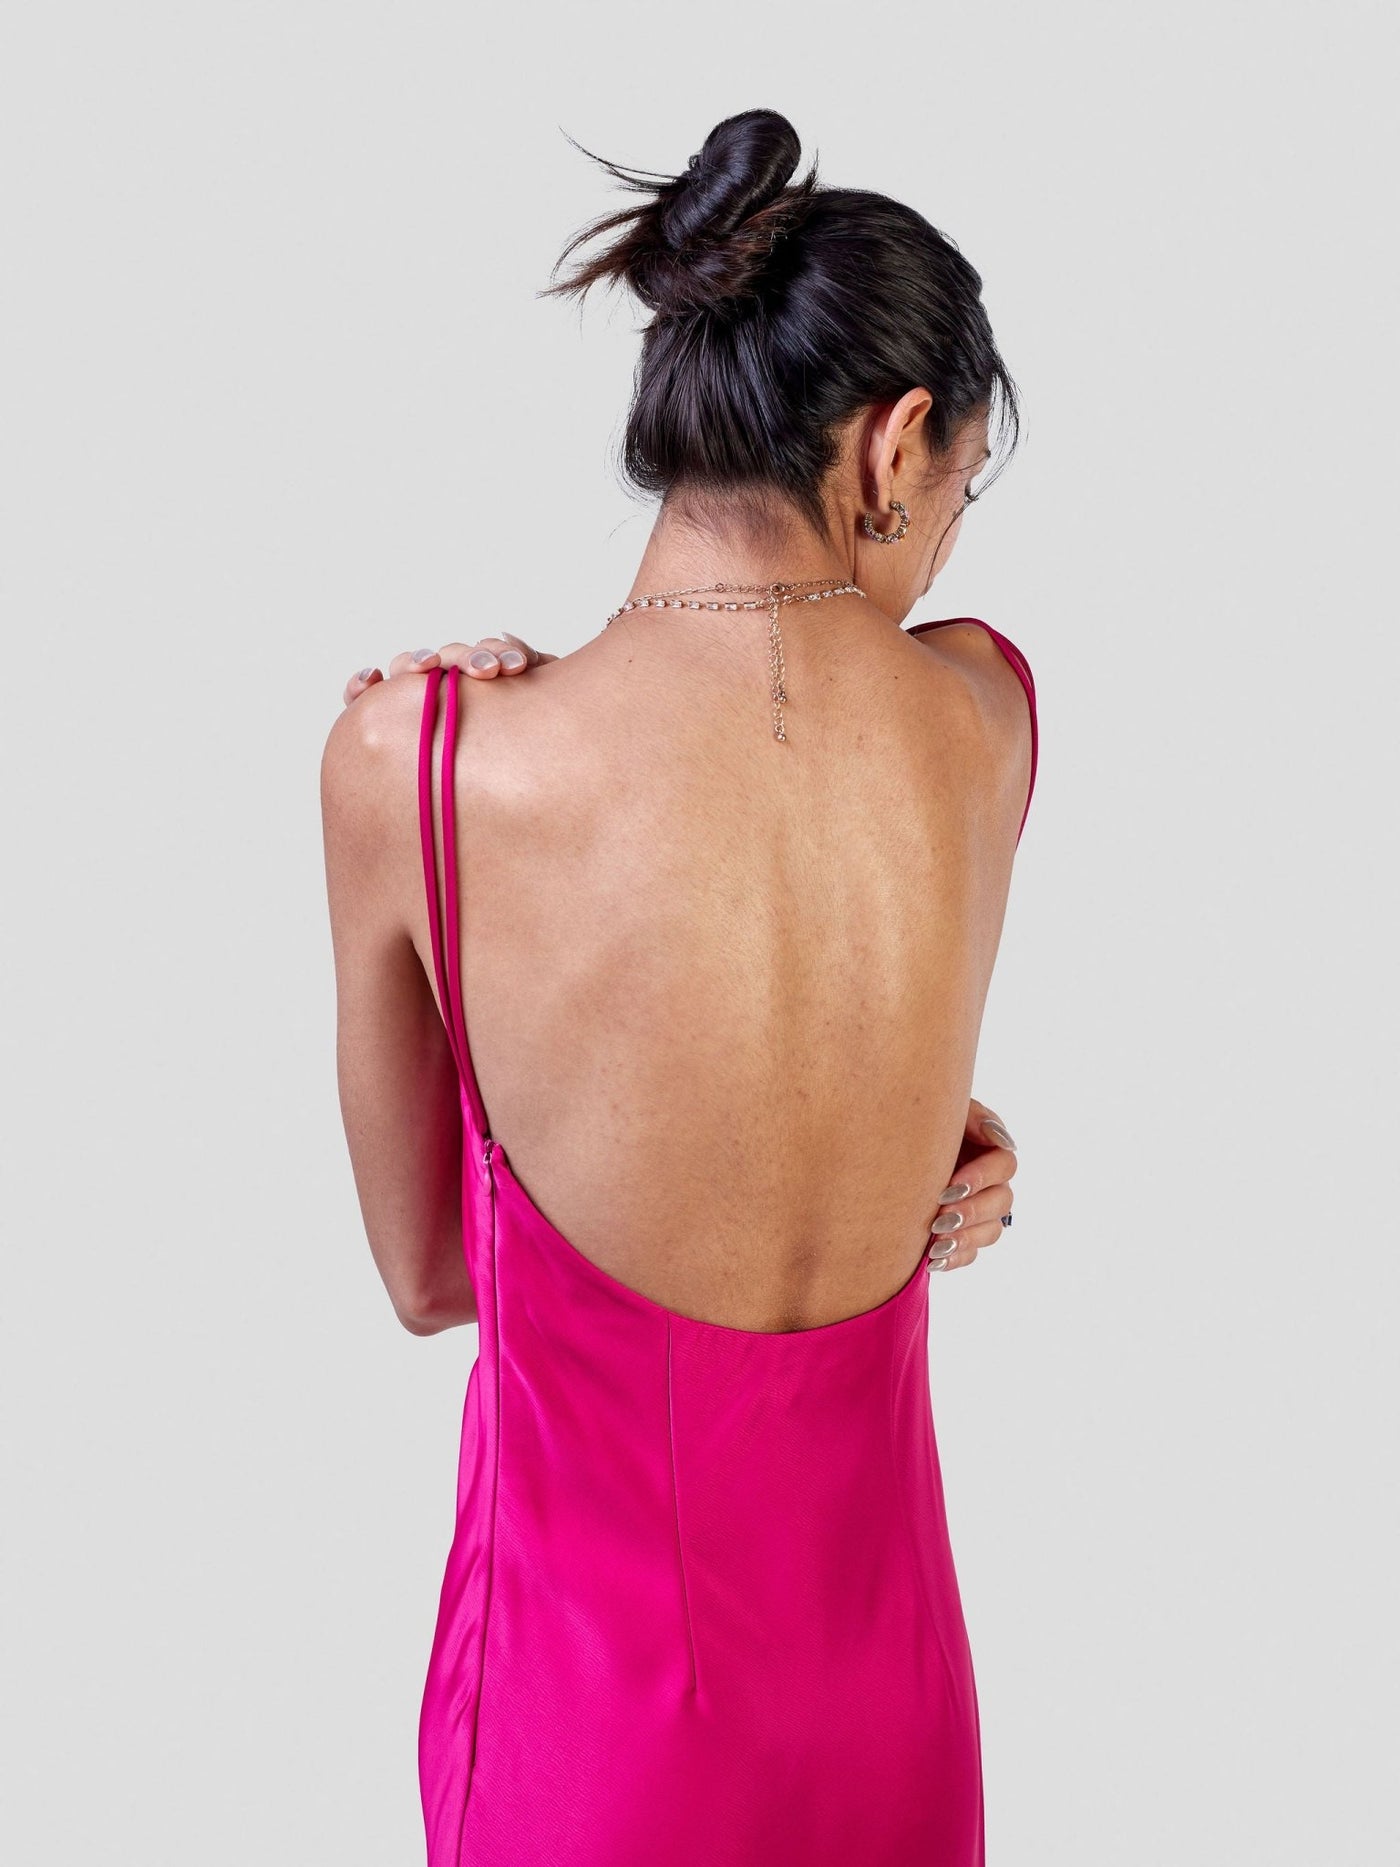 Carrie Wahu X SZ Long Satin Double Strap Dress - Hot Pink - Shopzetu